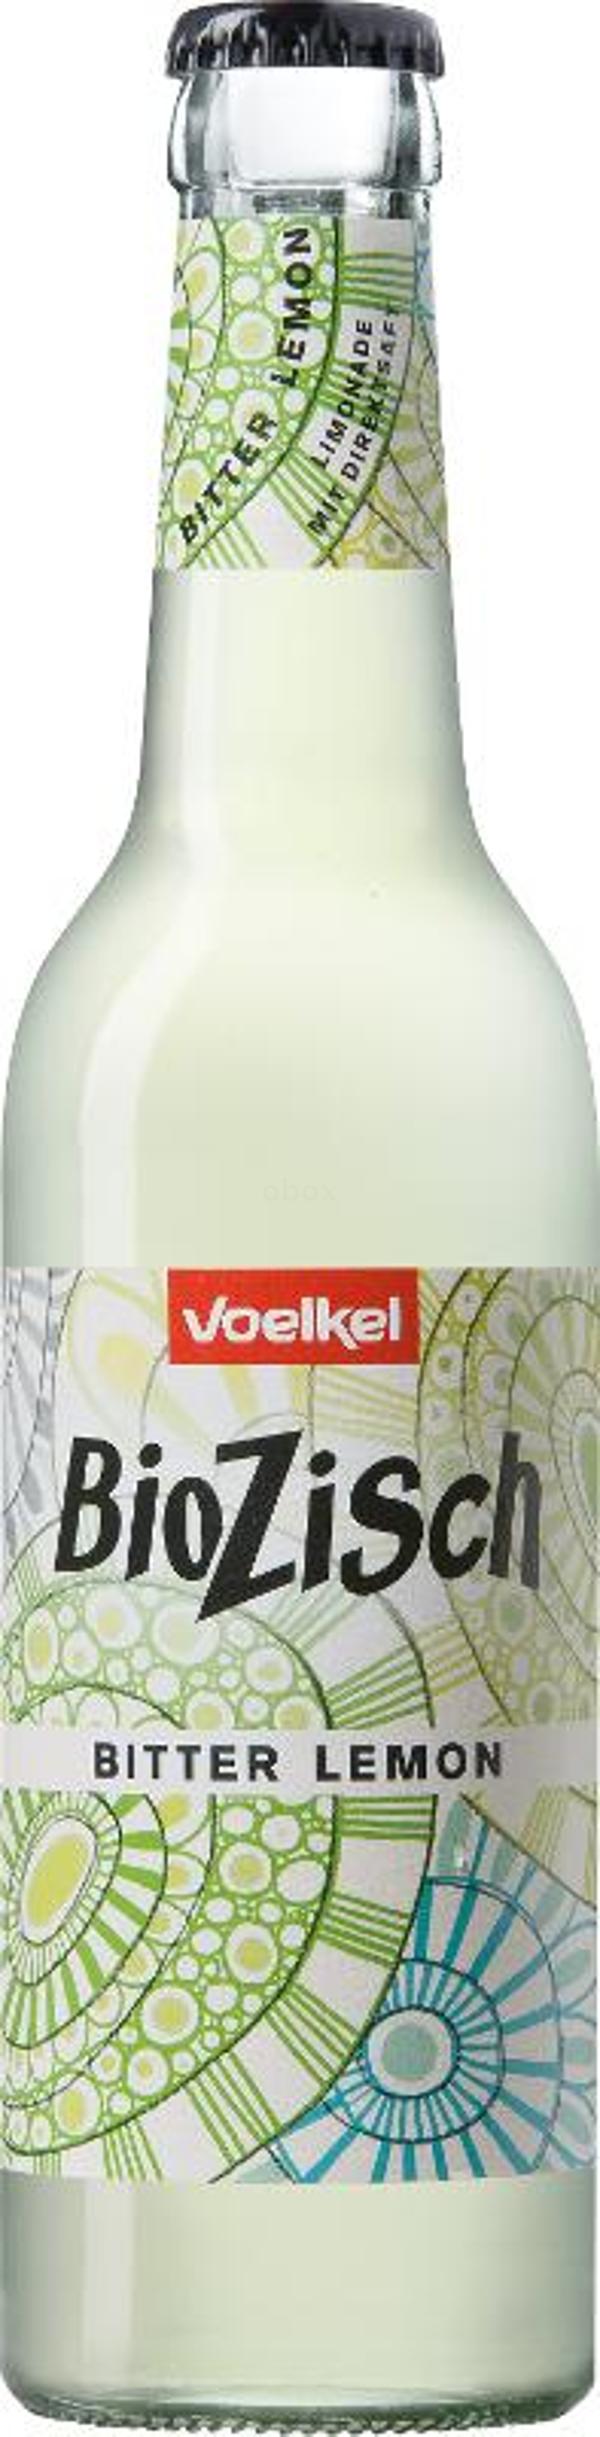 Produktfoto zu BioZisch Bitter Lemon - 0,33l